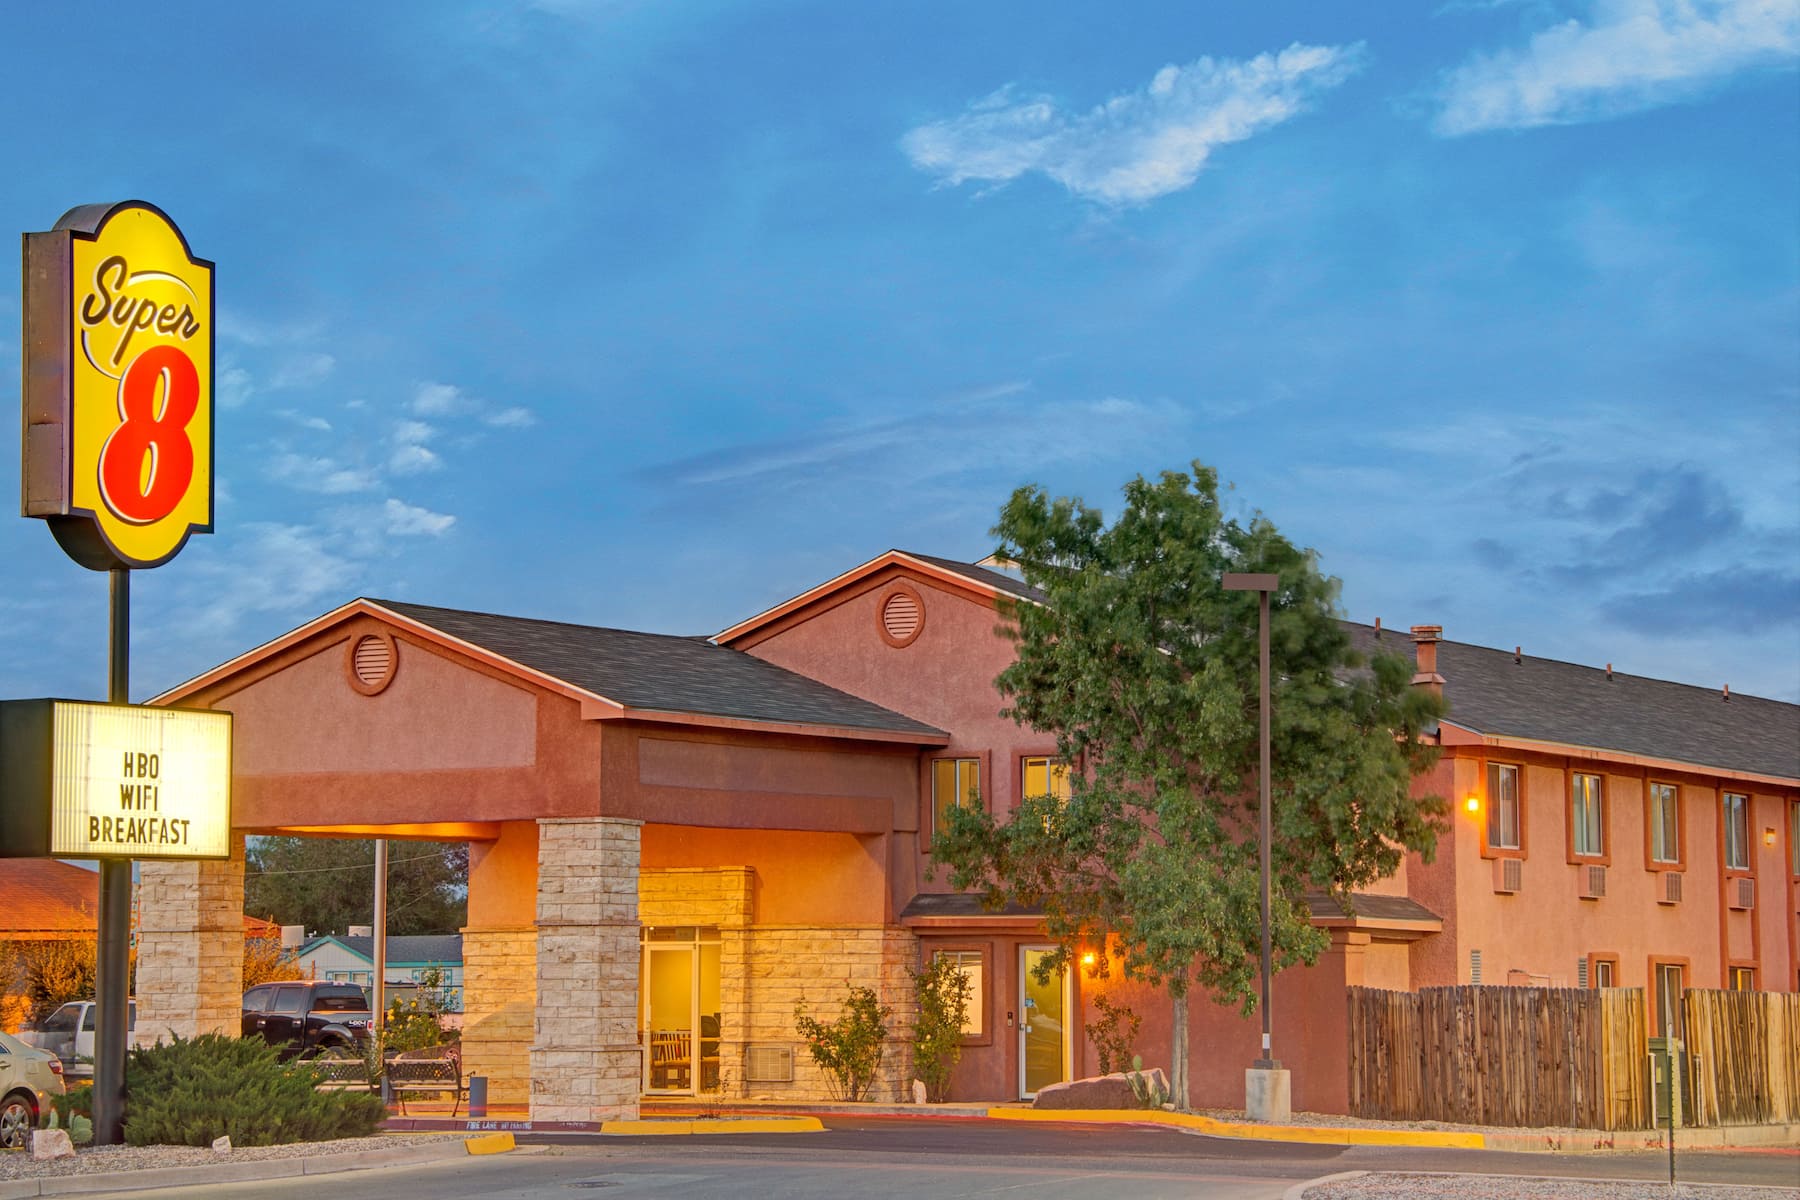 Exterior of Super 8 by Wyndham Belen NM hotel in Belen, New Mexico.